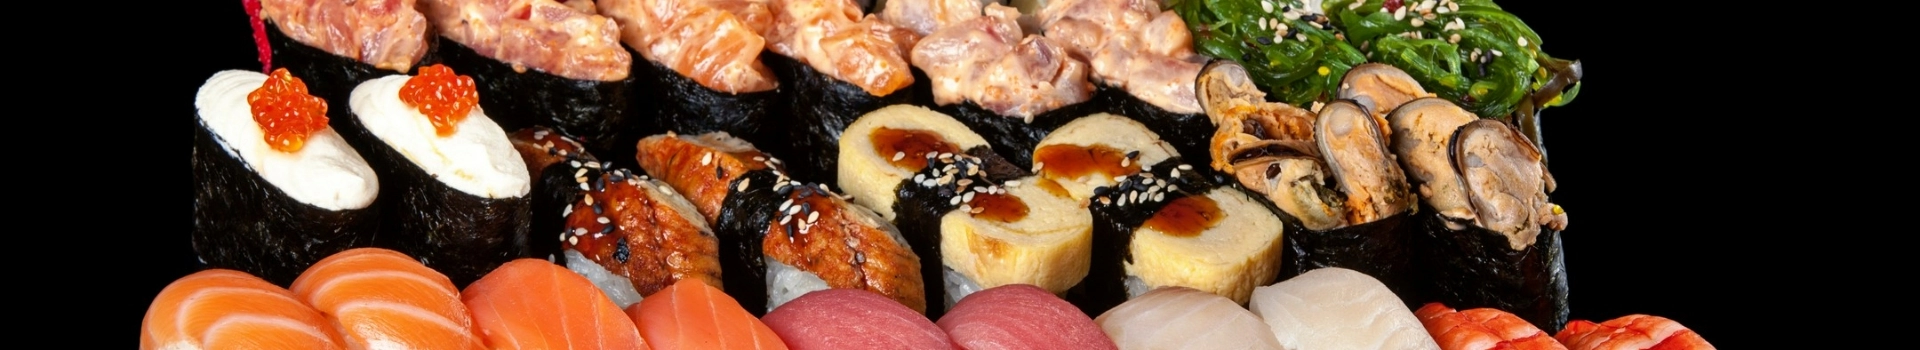 kawałki sushi